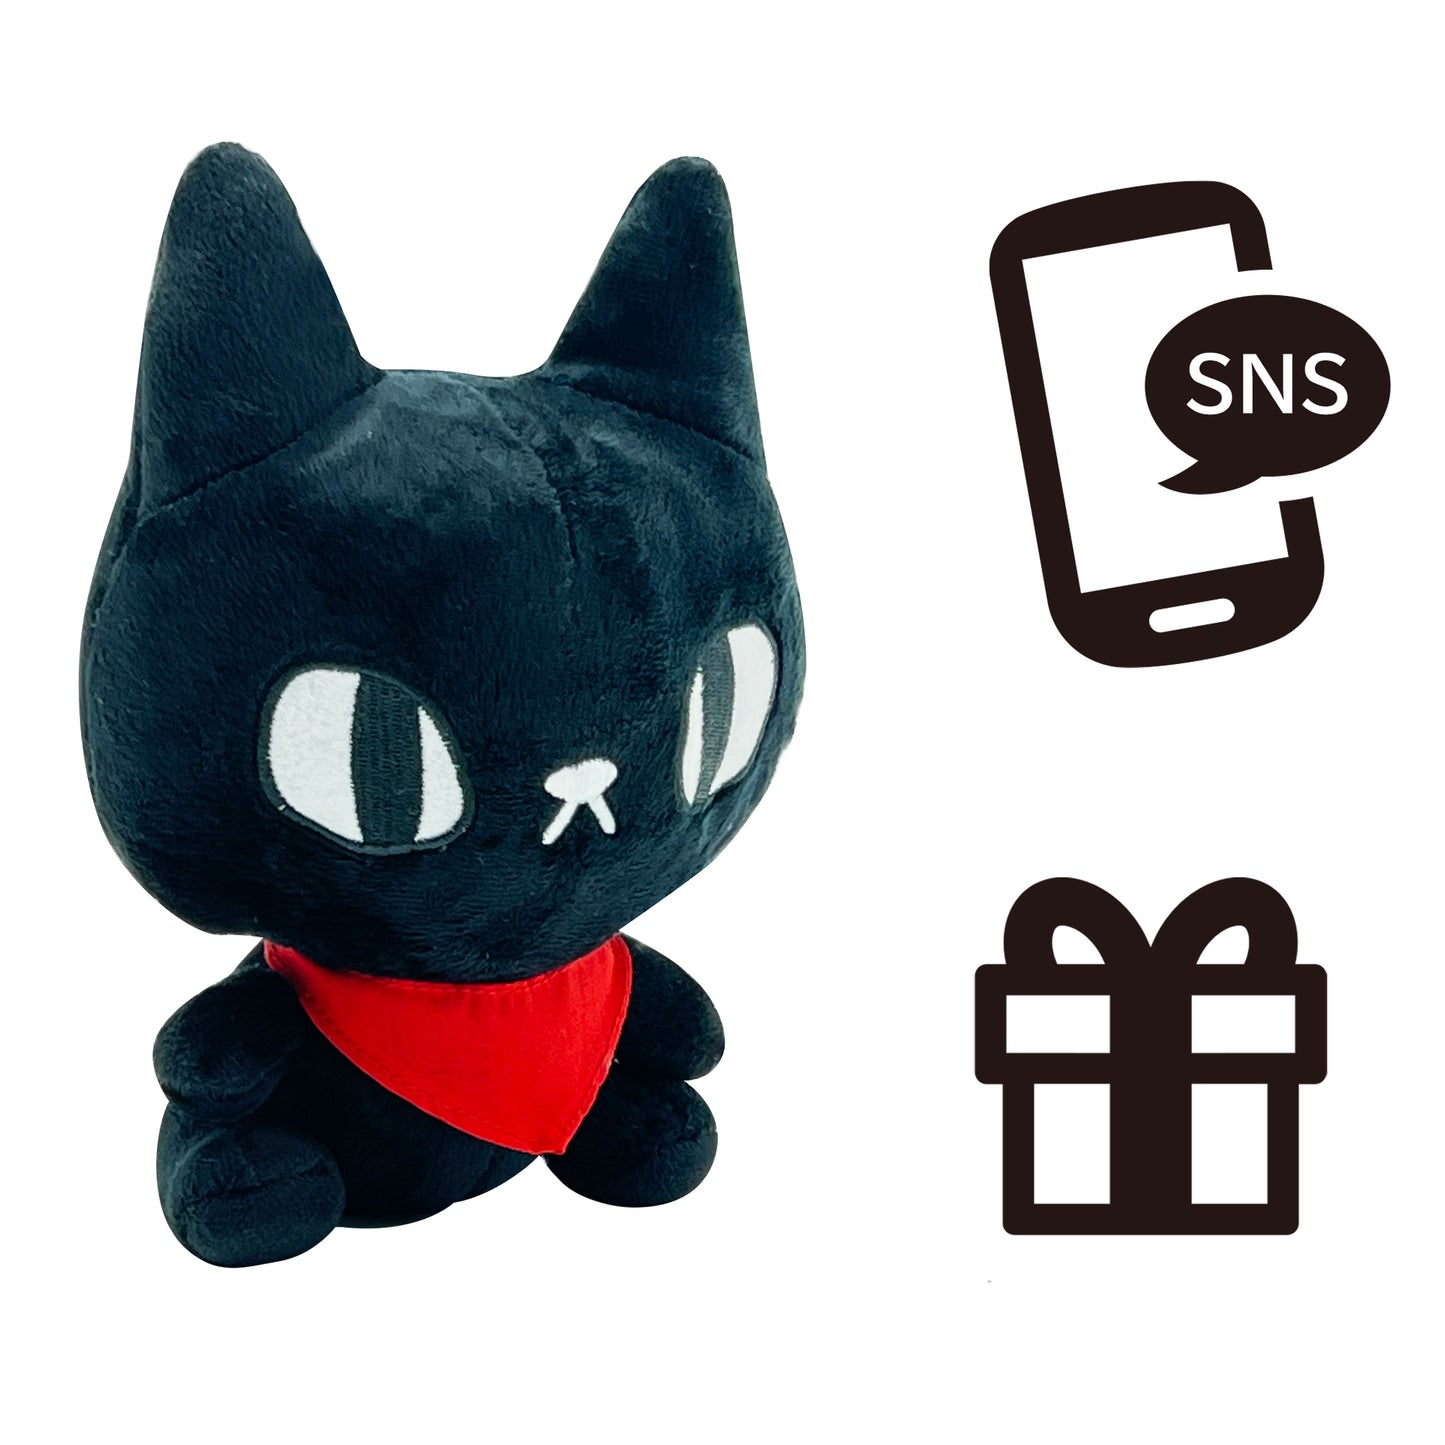 6_Black_Cat_Stuffed_Toy_Pictogram.jpg